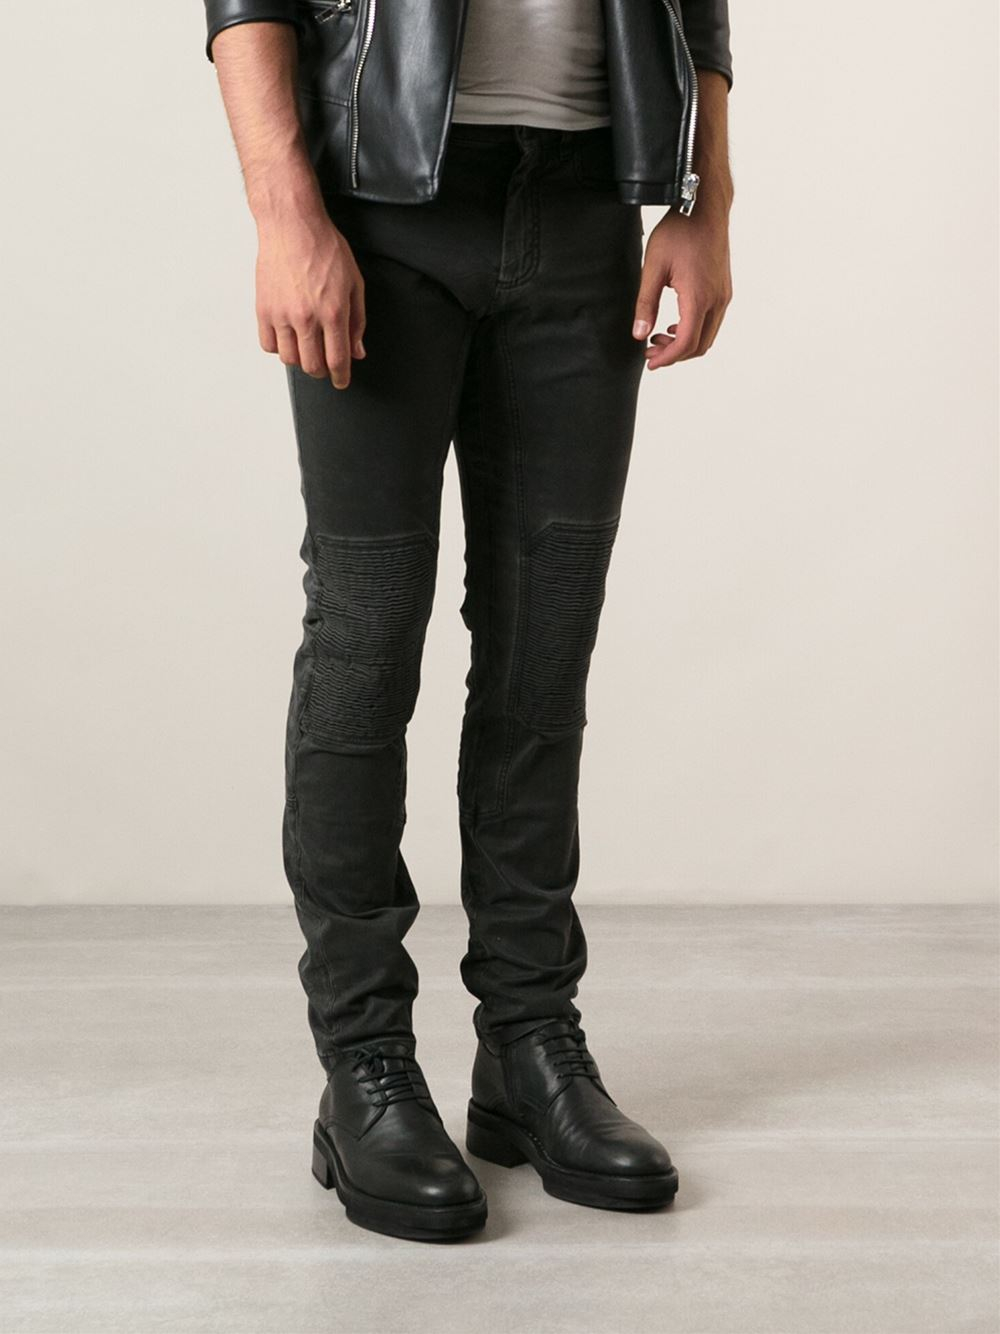 Belstaff Ribbed Knee Slim Jeans in Black for Men - Lyst